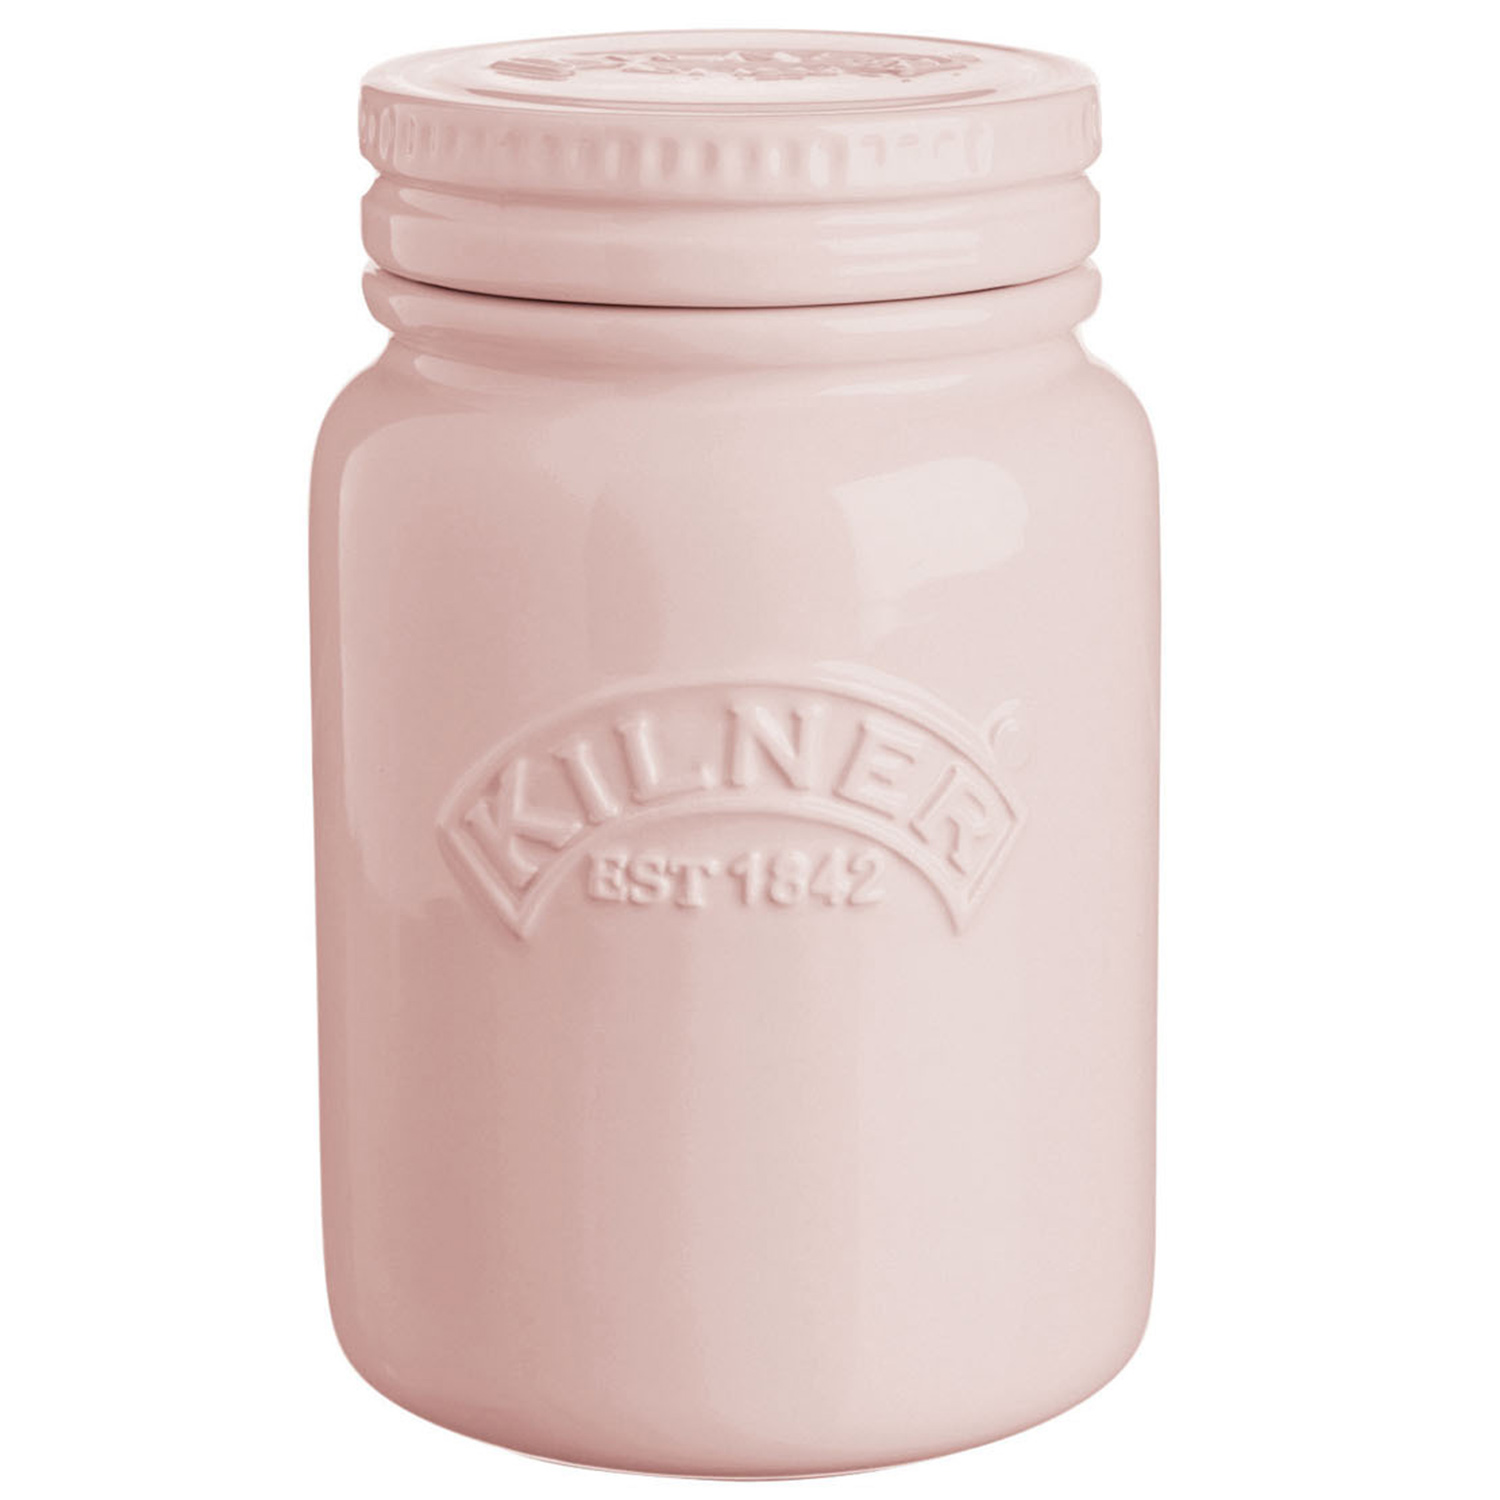 Kilner Dusky Pink Storage Jar with Push Top Lid 600ml Image 1